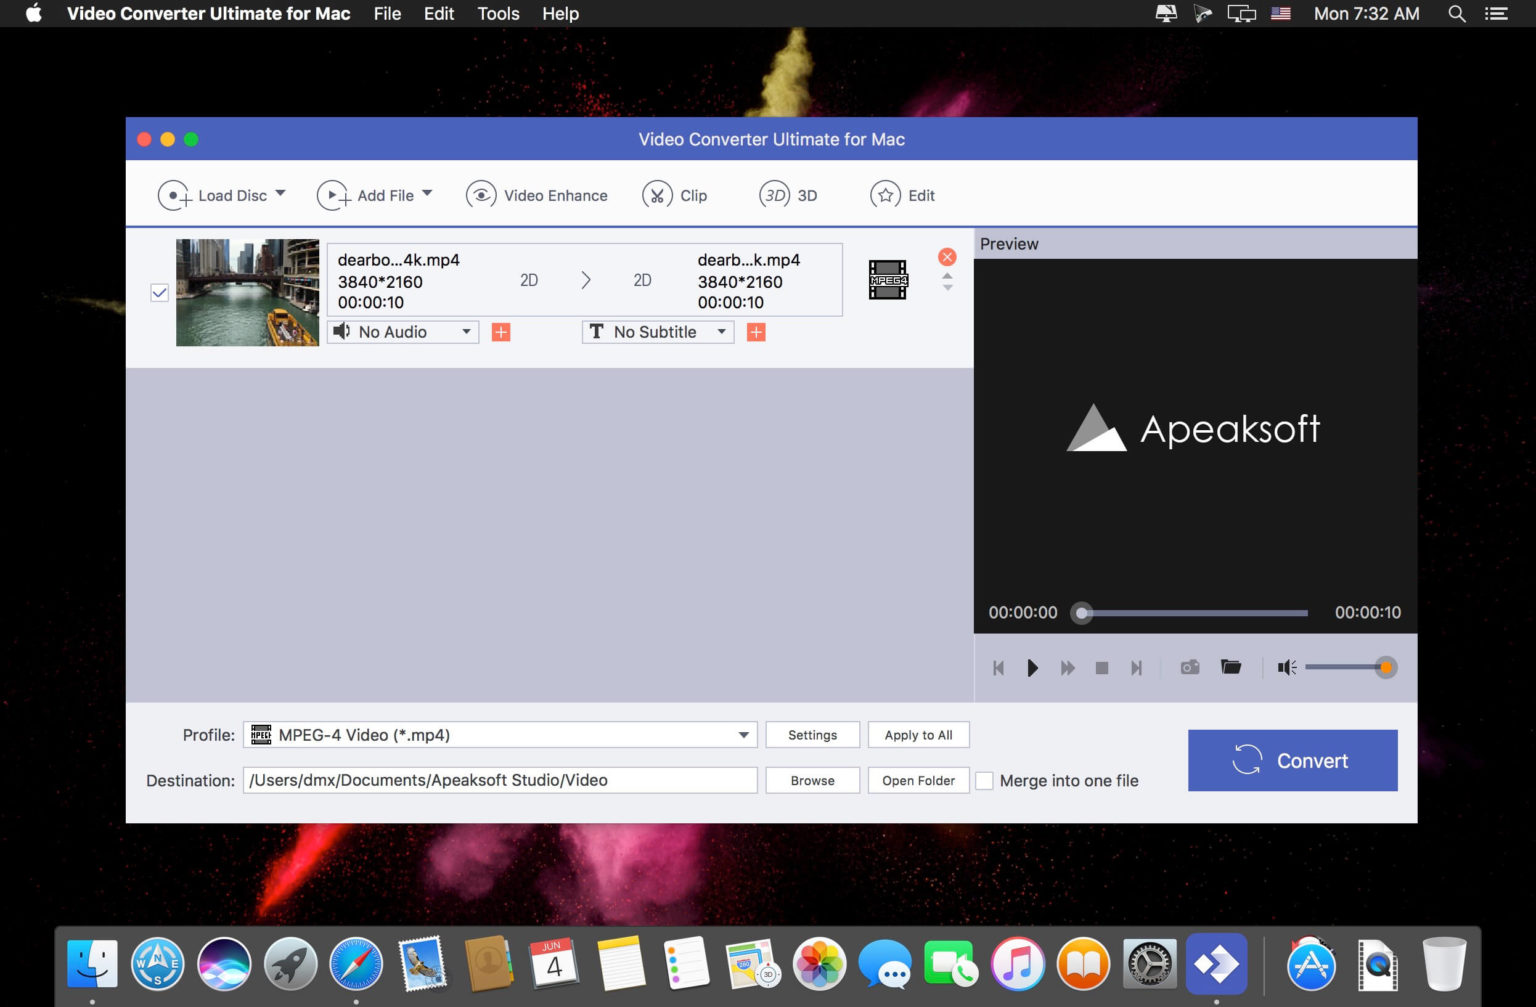 Apeaksoft Video Converter Ultimate 2.3.36 download